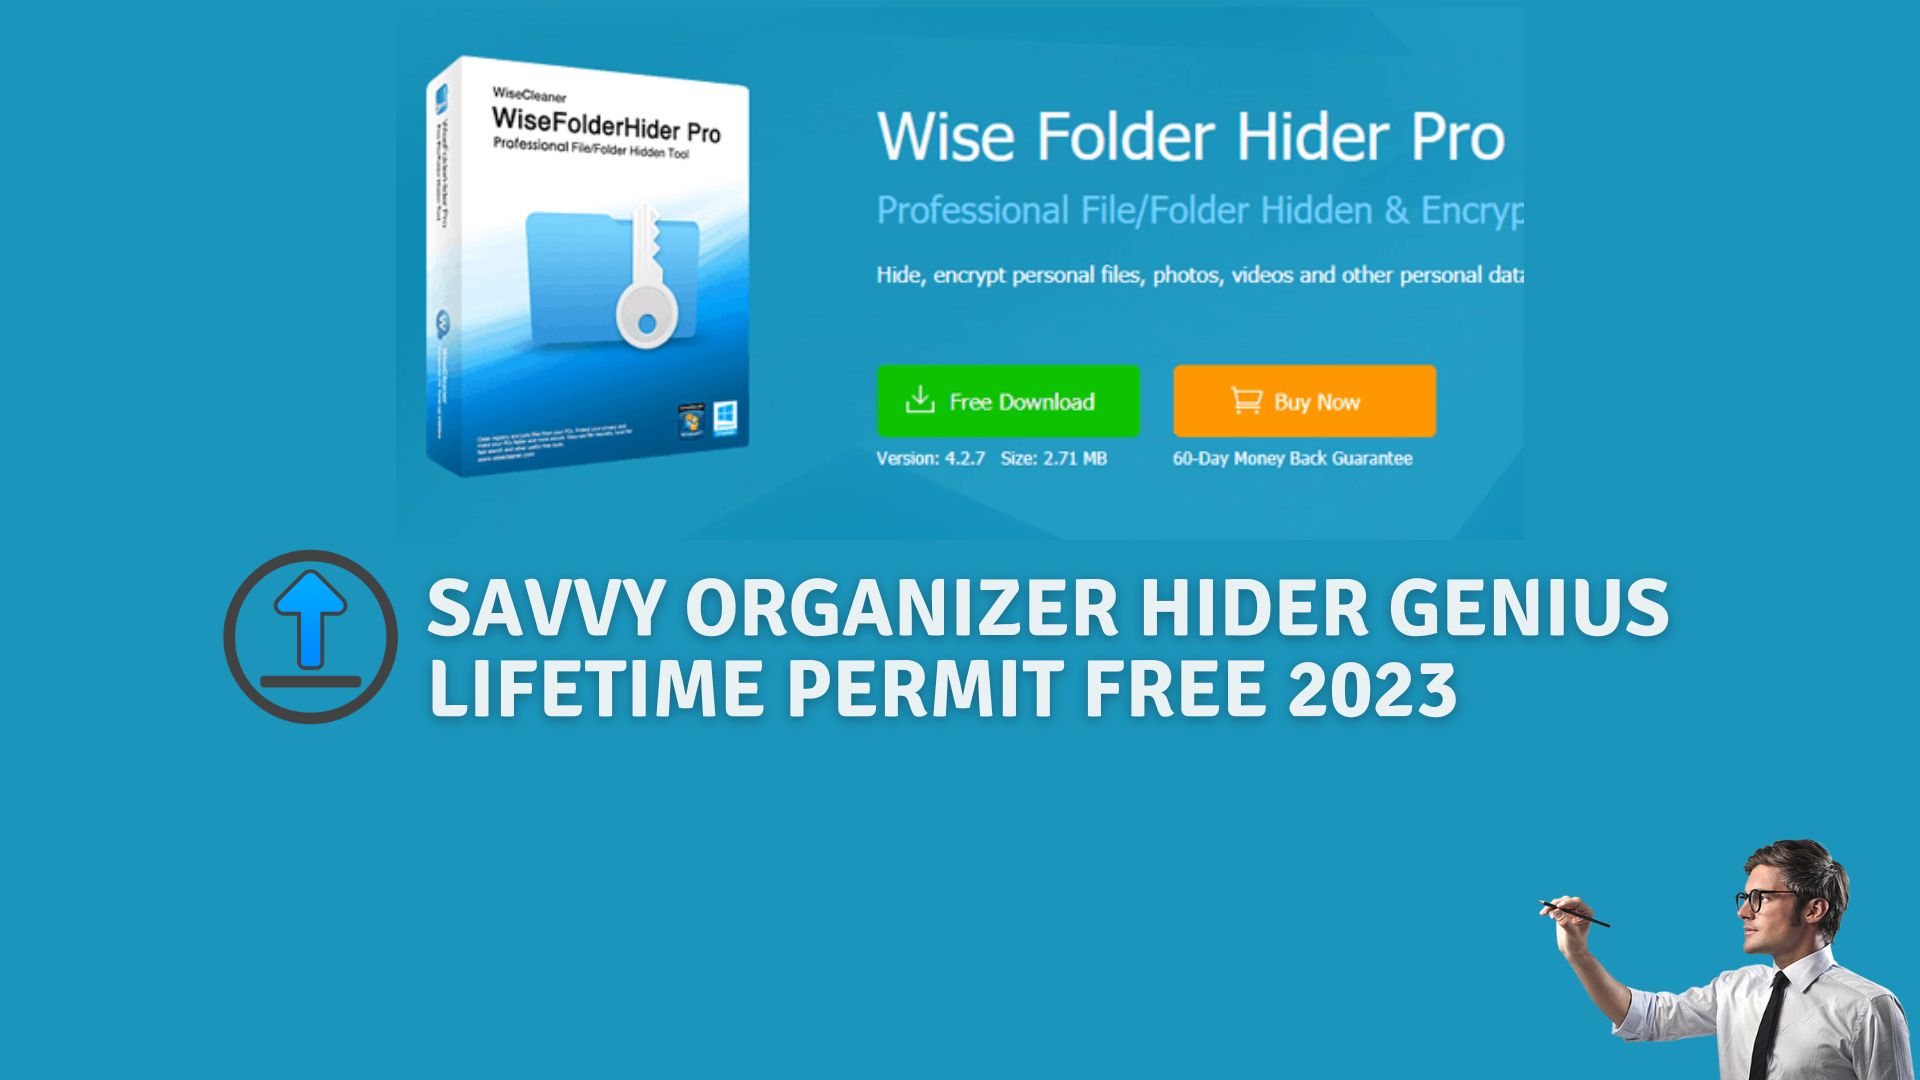 Savvy organizer hider genius lifetime permit free 2023